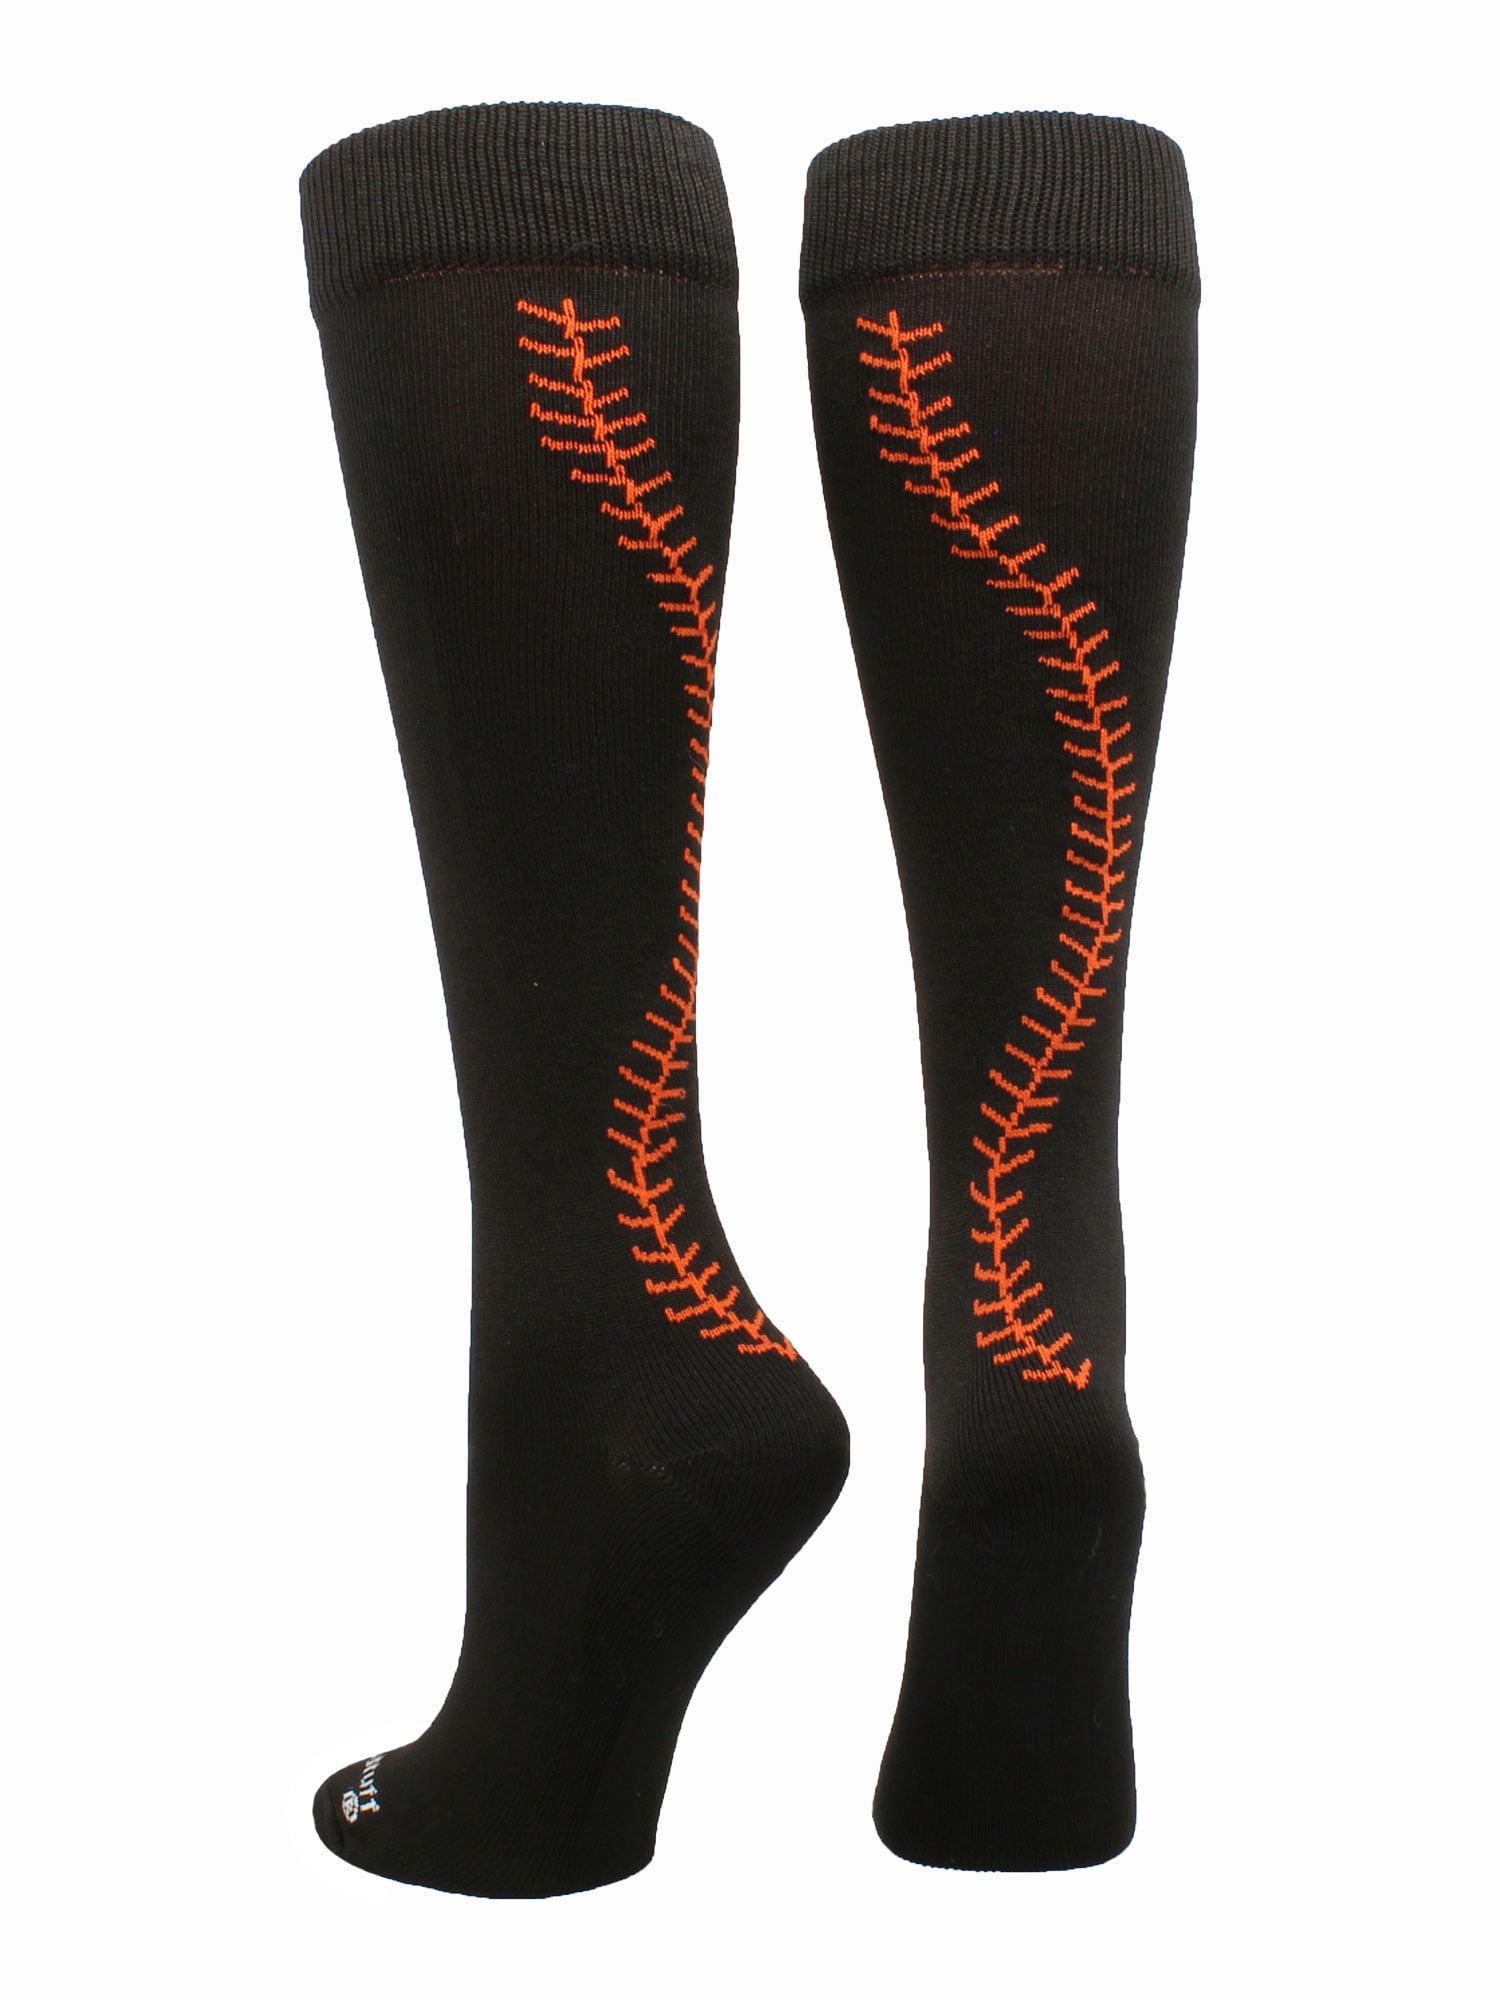 Softball Socks with Stitches Over the Calf (Black/Orange, Medium ...